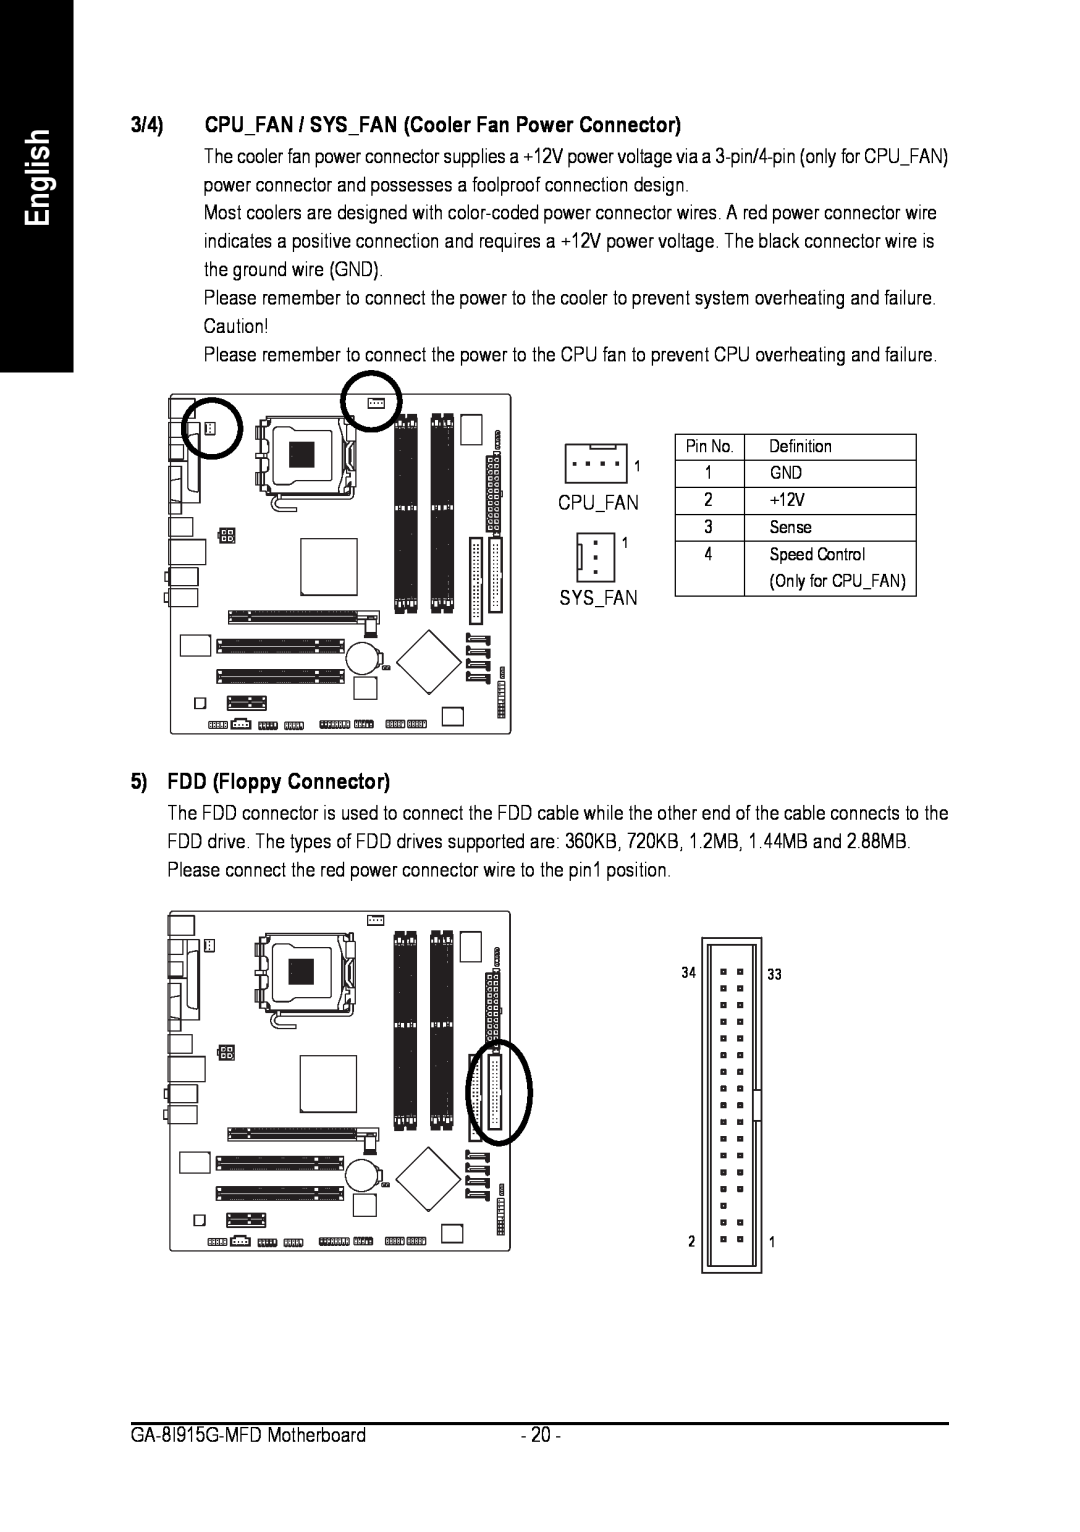 Intel GA-8I915G-MFD user manual 3/4 CPU_FAN / SYS_FAN Cooler Fan Power Connector, 5FDD Floppy Connector, English 